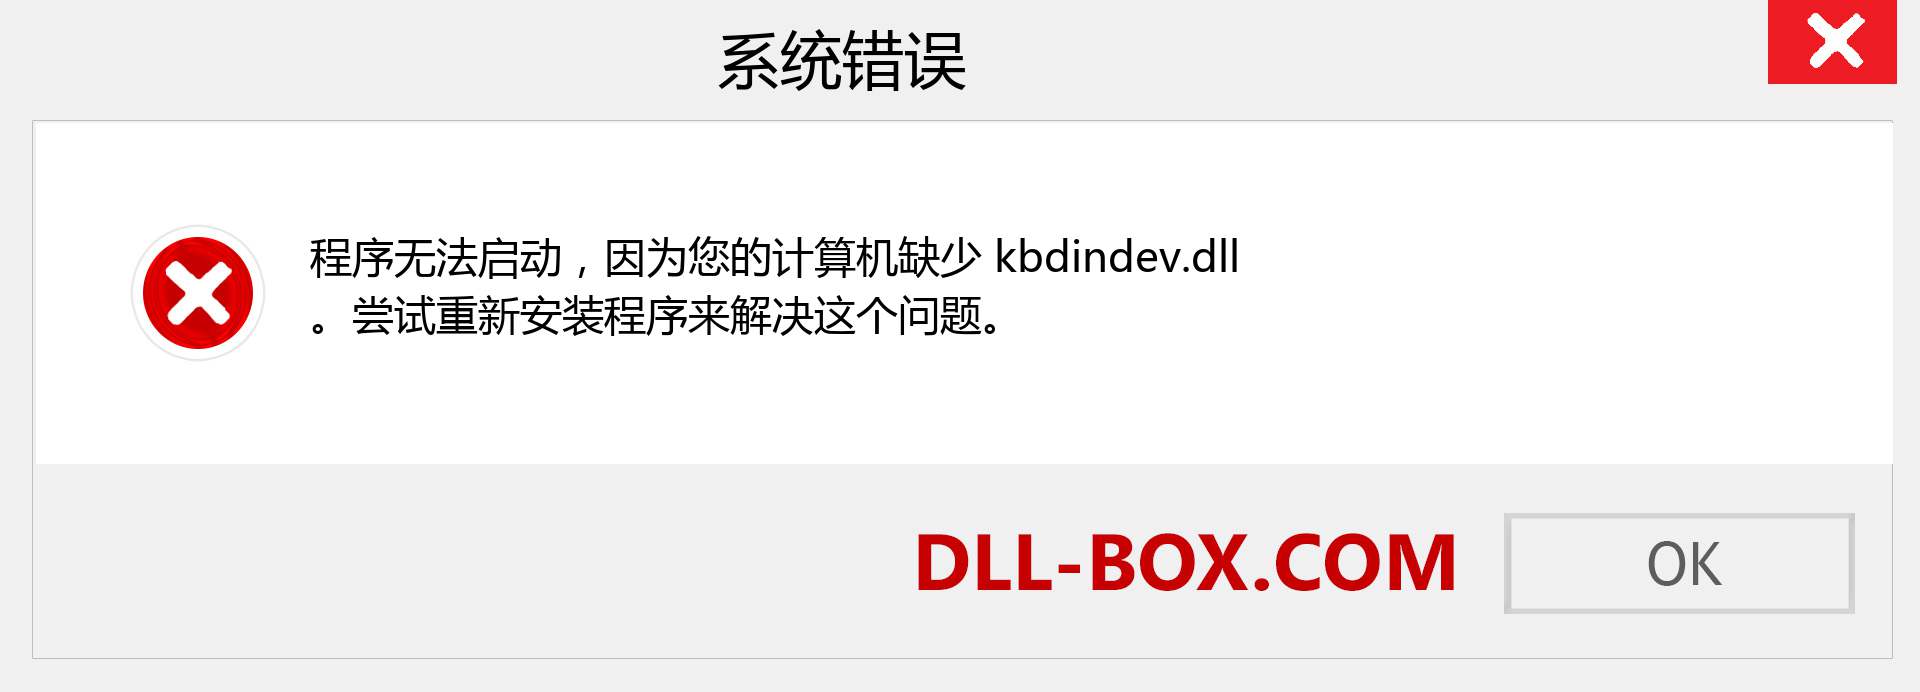 kbdindev.dll 文件丢失？。 适用于 Windows 7、8、10 的下载 - 修复 Windows、照片、图像上的 kbdindev dll 丢失错误